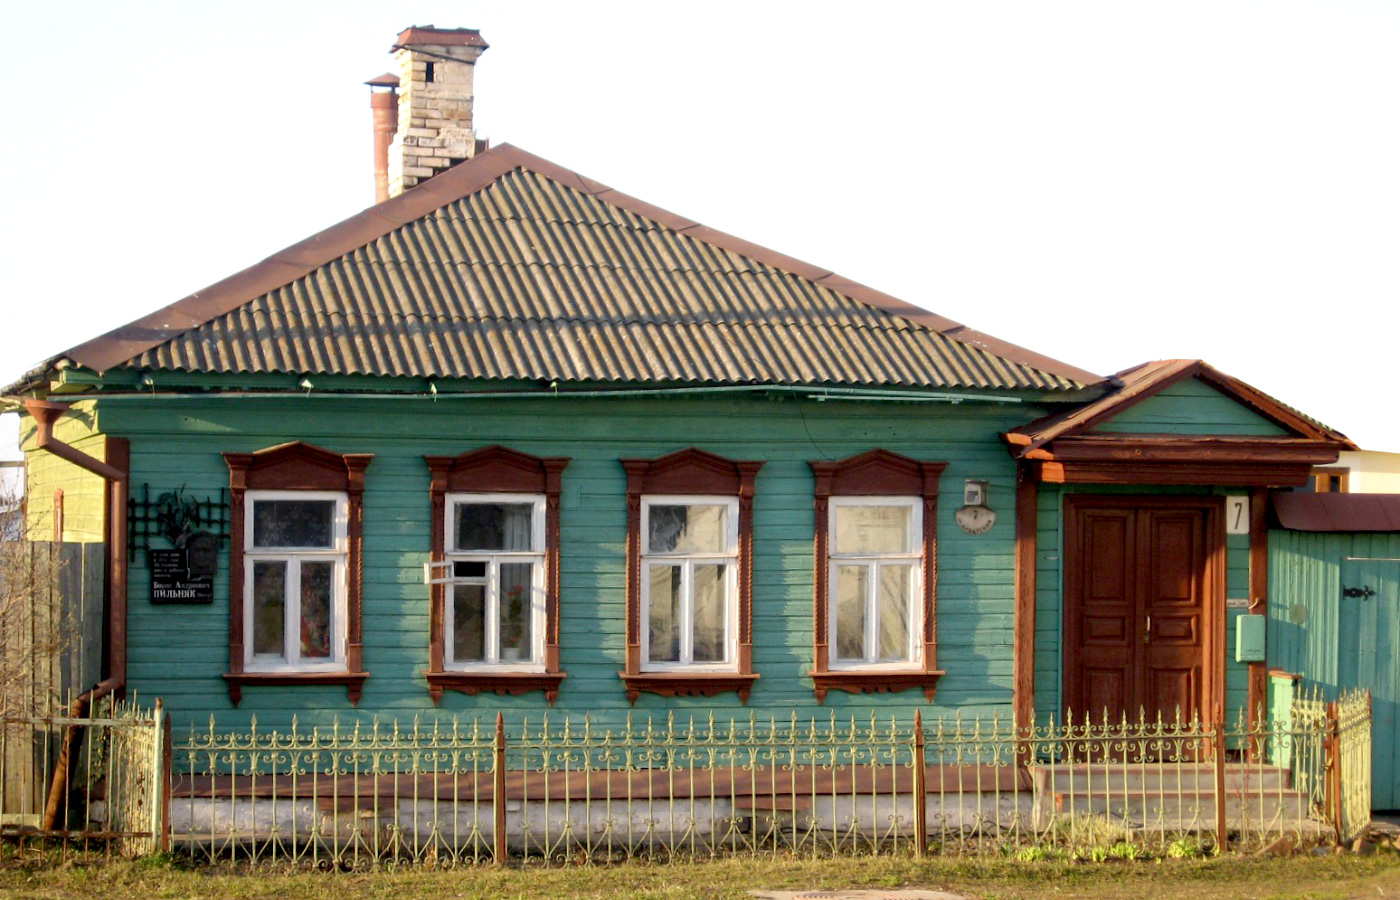 Дом Пильняка в Коломне на улице Арбатская. Фото: Pavel Yegorov / Wikimedia Commons